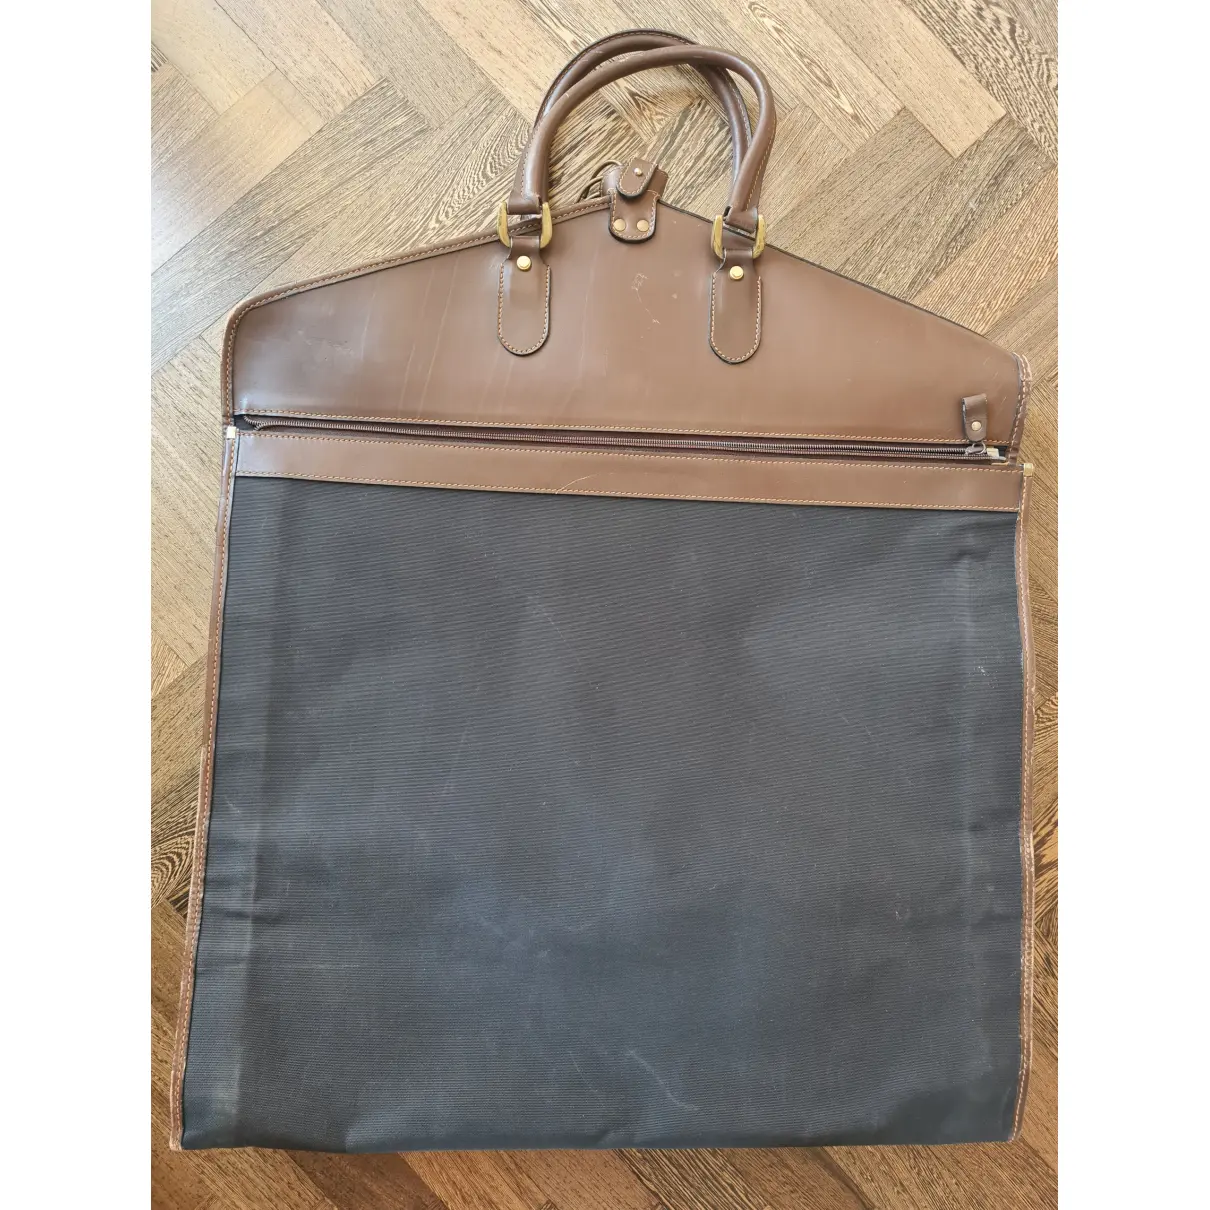 Buy Salvatore Ferragamo Cloth travel bag online